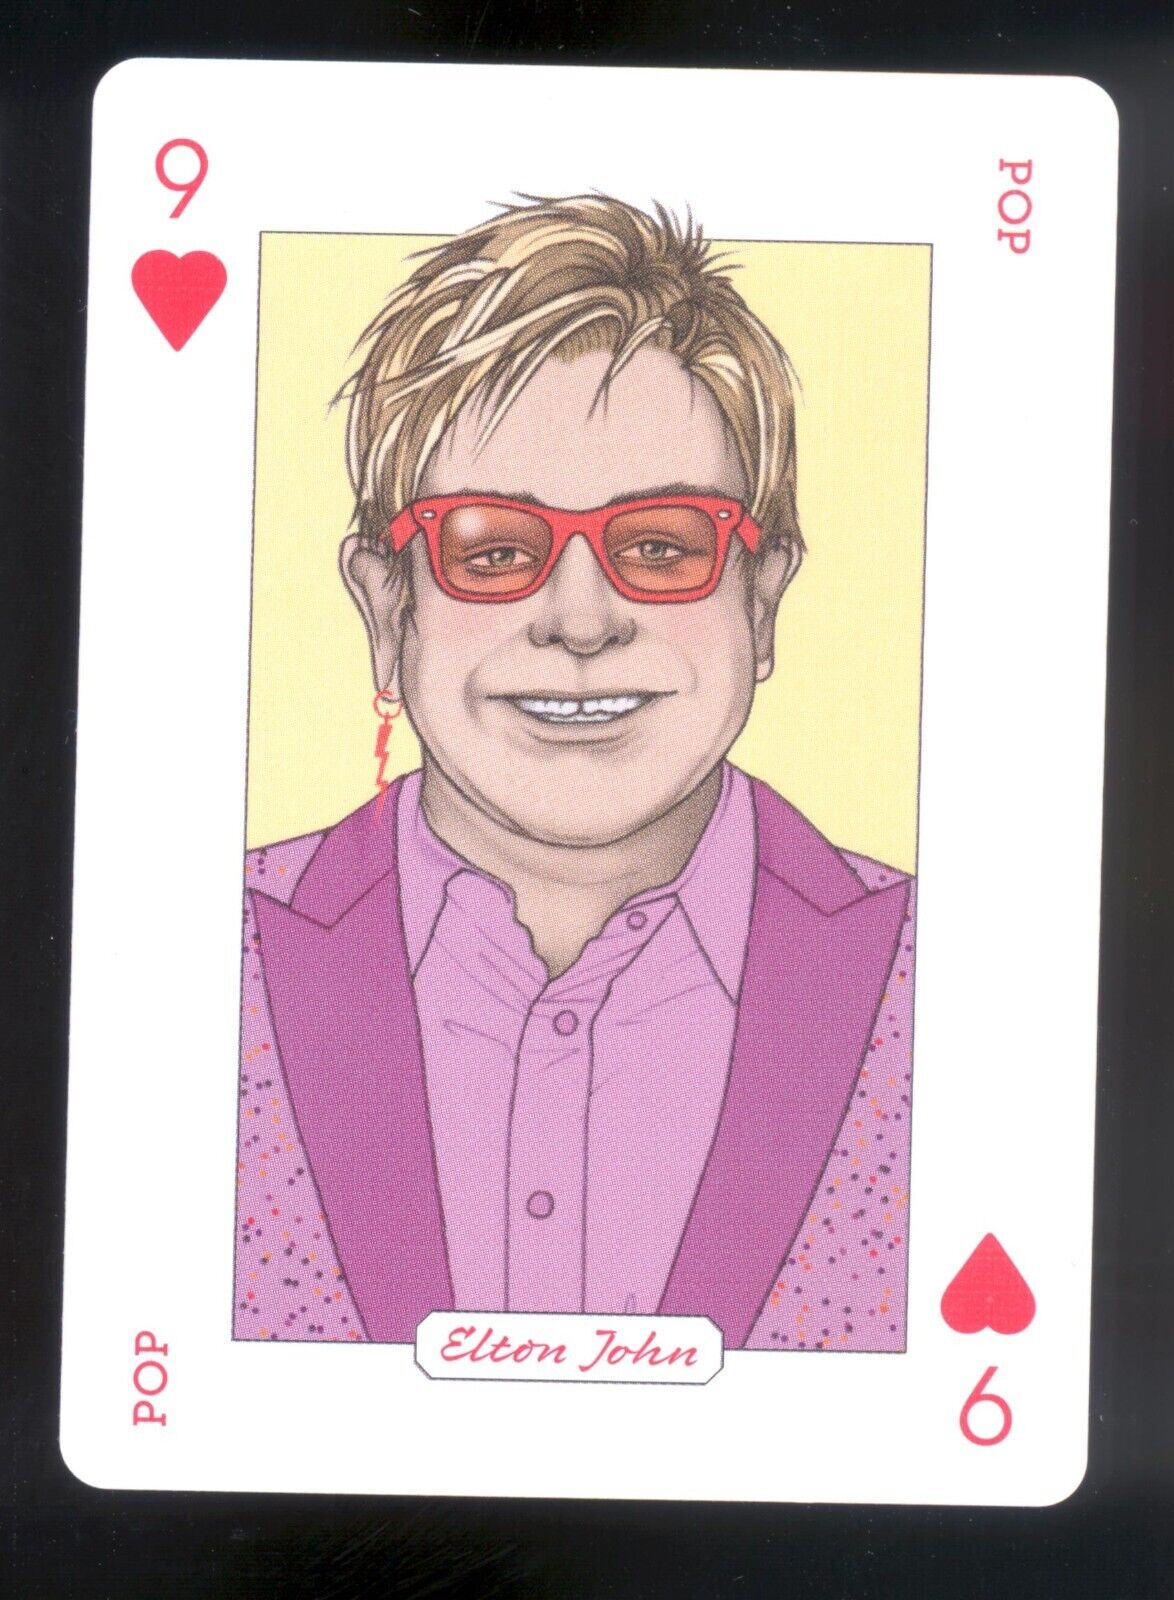 Elton John Music Genius Playing Trading Card 2018 Mint Condition